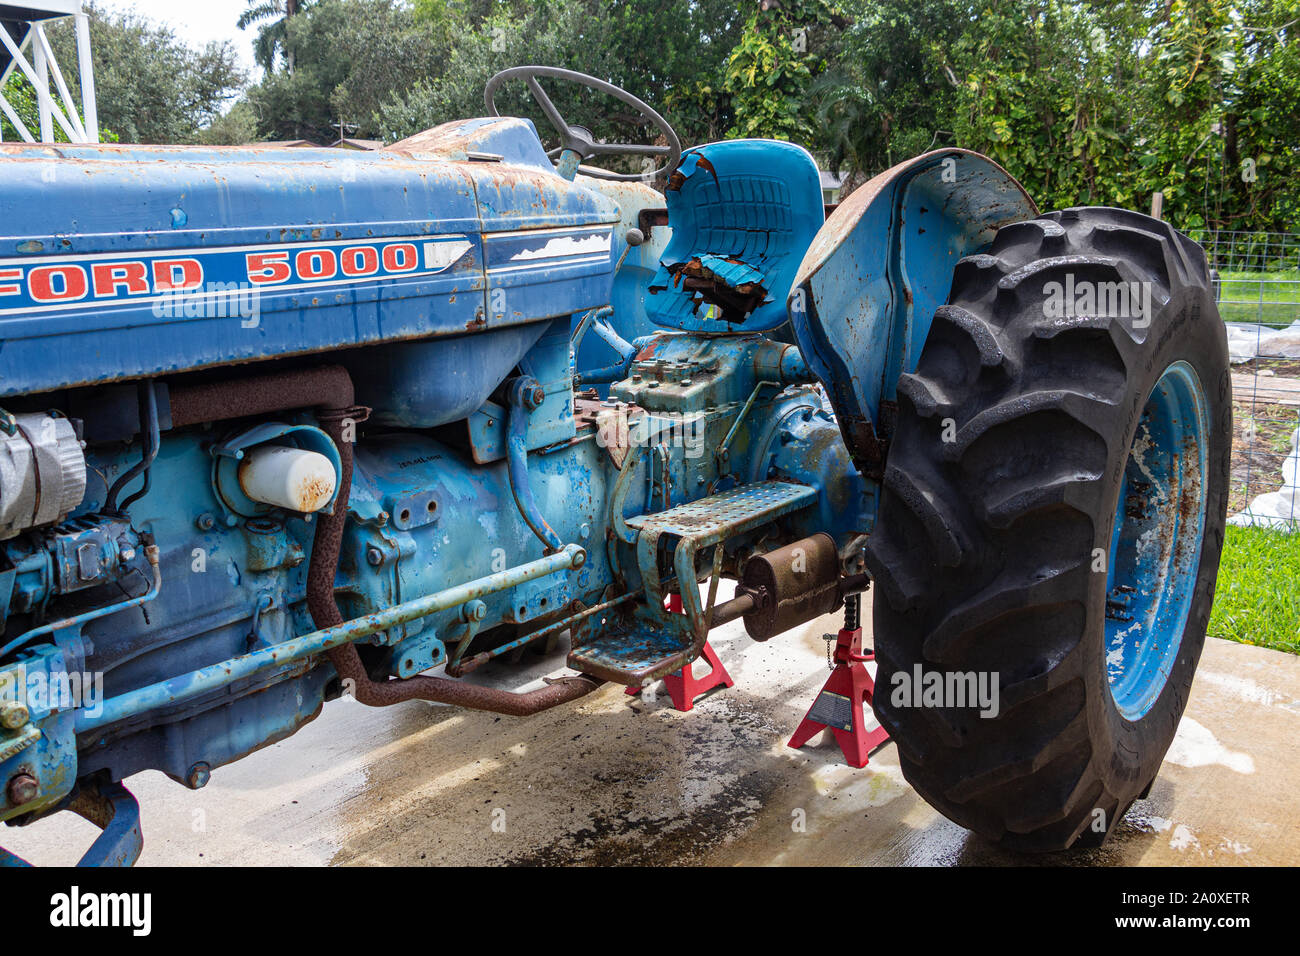 Alter Ford 5000 Traktor, Blau - Davie, Florida, USA Stockfotografie - Alamy